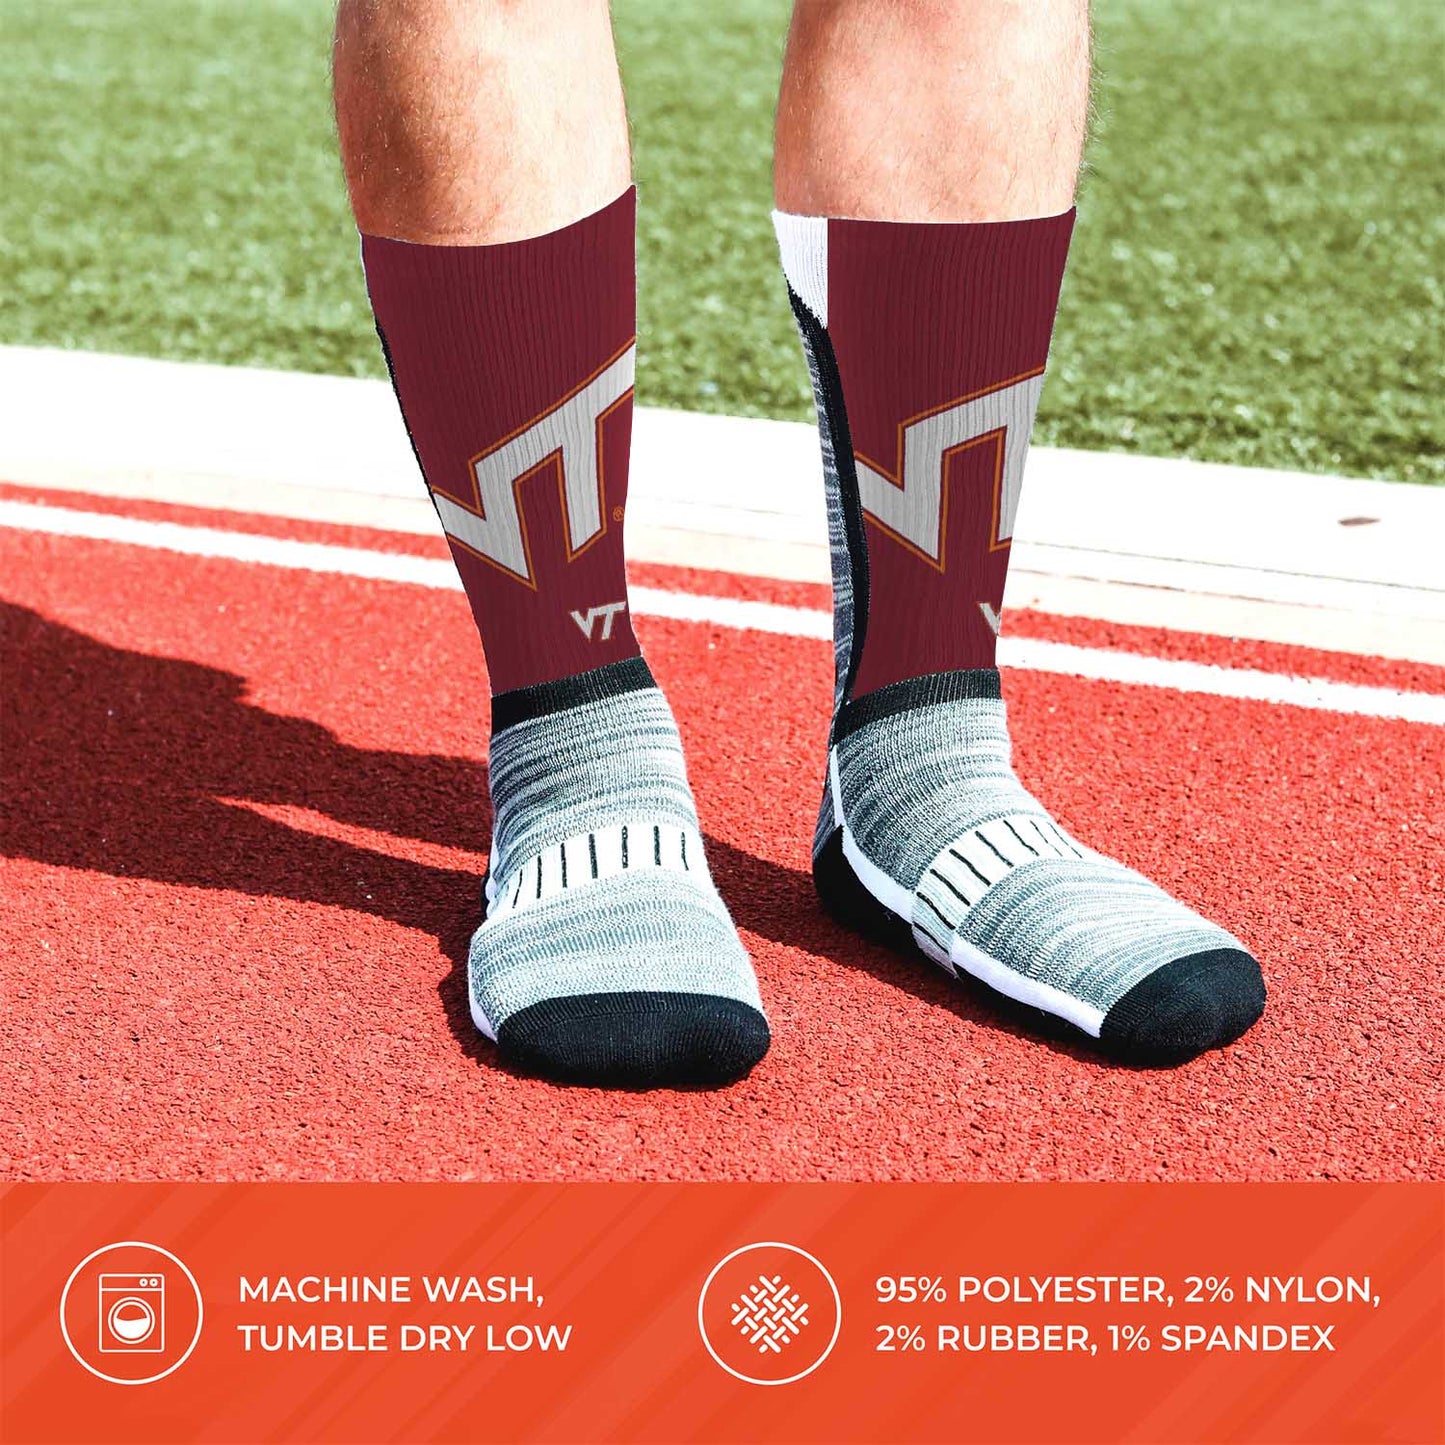 Virginia Tech Hokies NCAA Adult State and University Crew Socks - Maroon